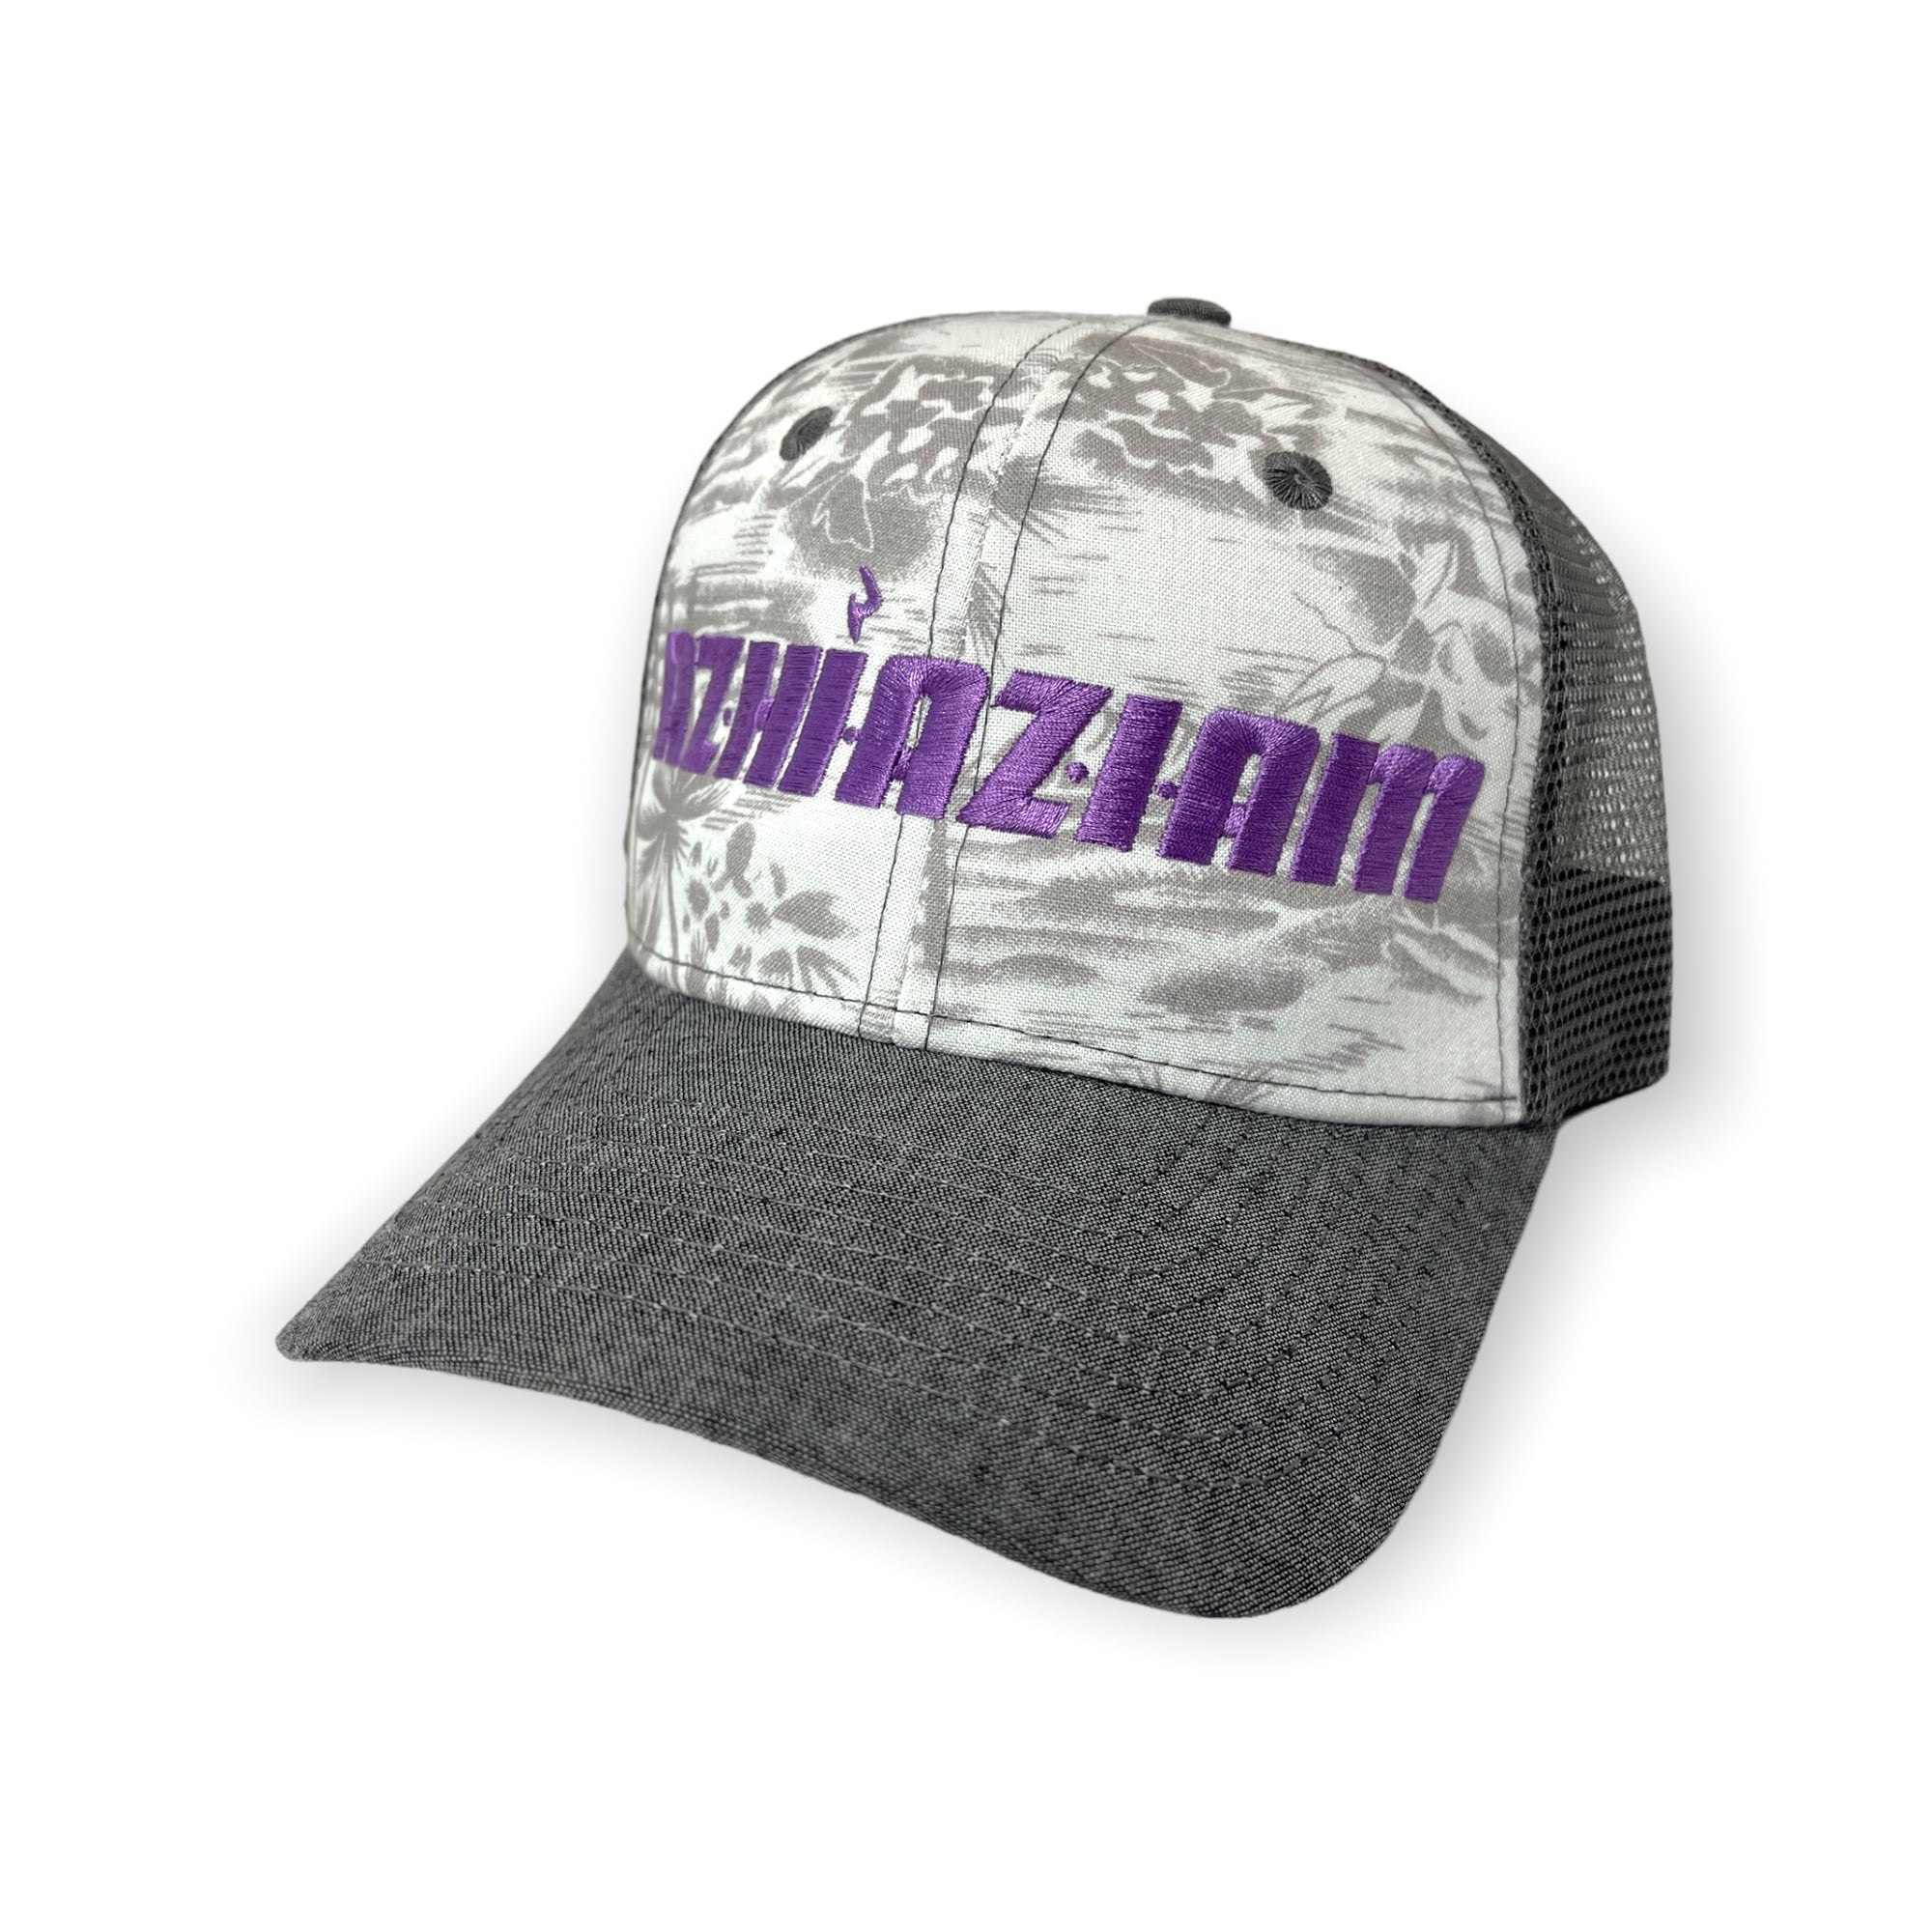 Azhiaziam Grey Paradise Curved Bill with Mesh Hat